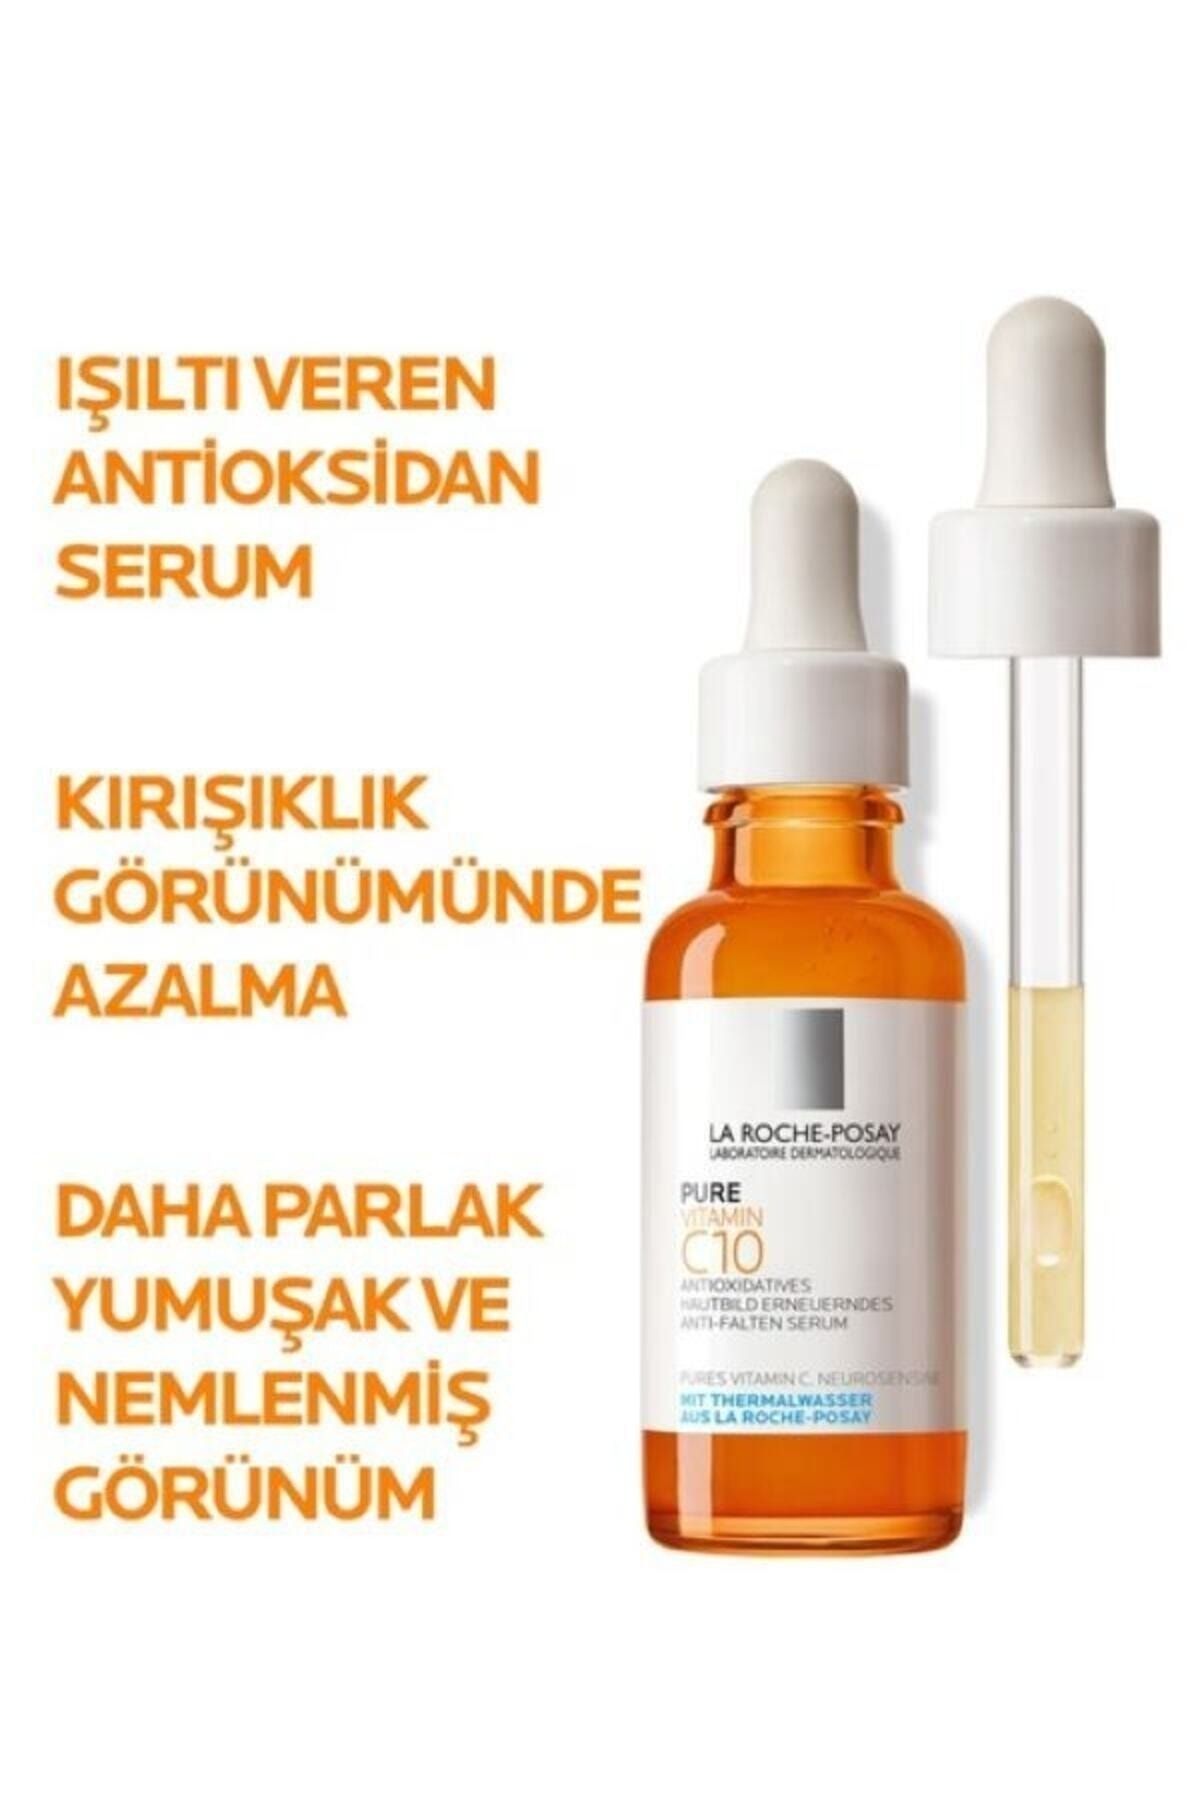 La Roche Posay Anti-Aging Antioxidant Serum with Pure Vitamin C10 - 30ml GKÜrün560